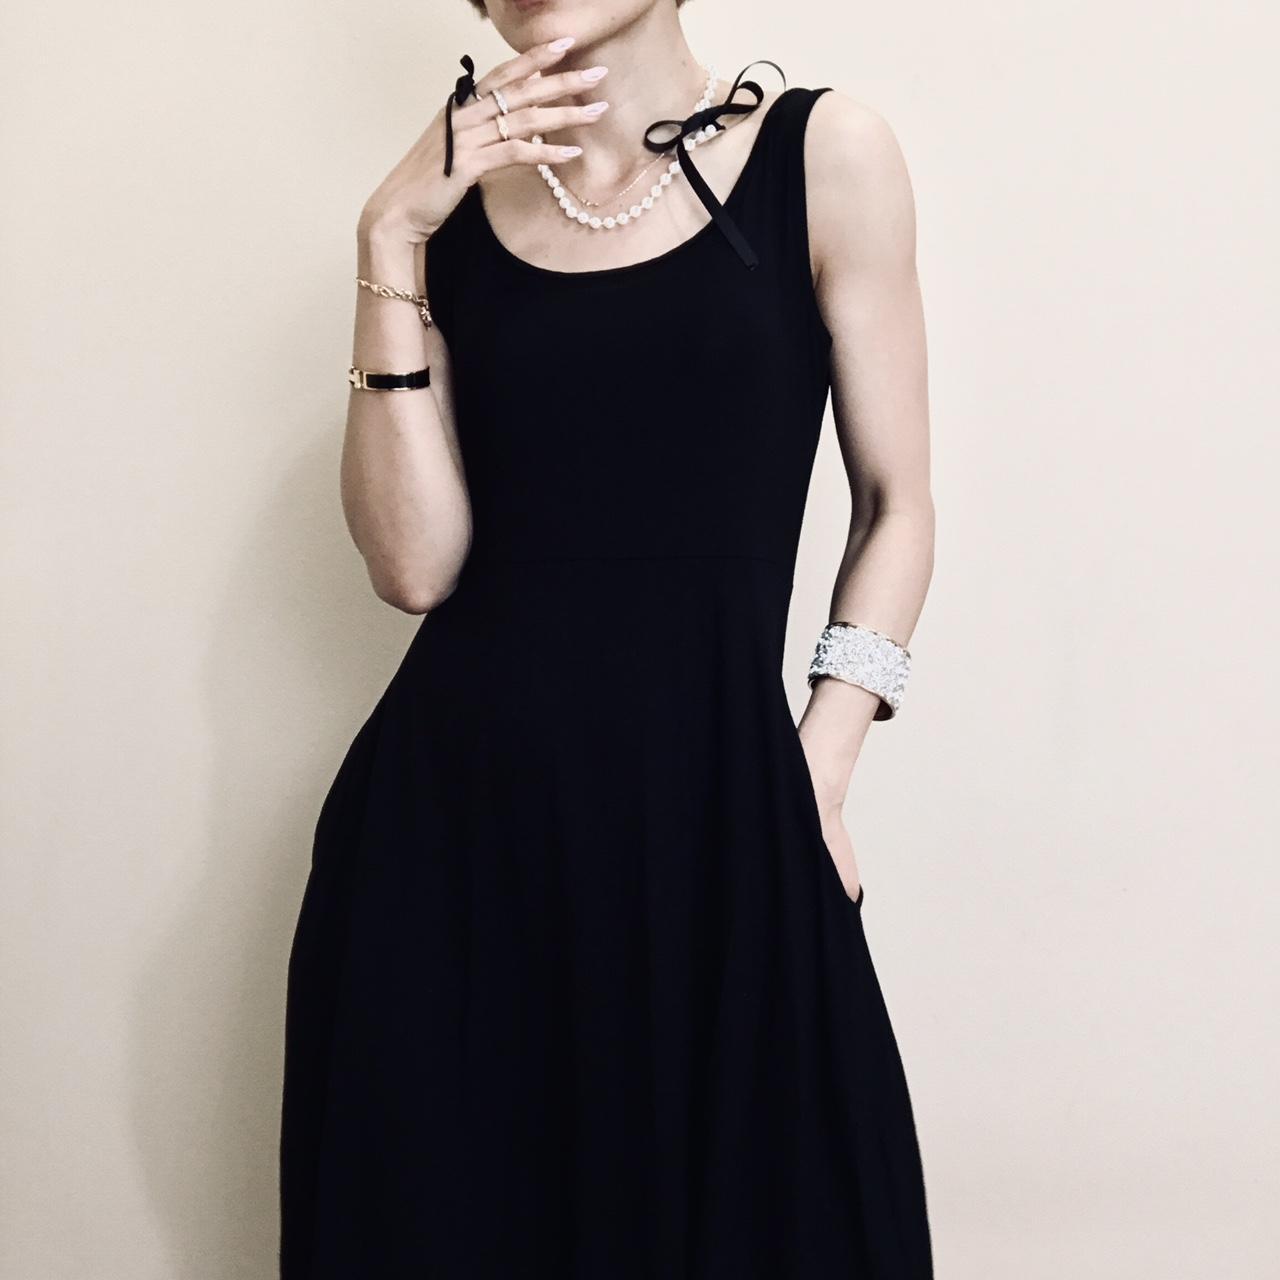 Nordstrom Women's Black Dress | Depop